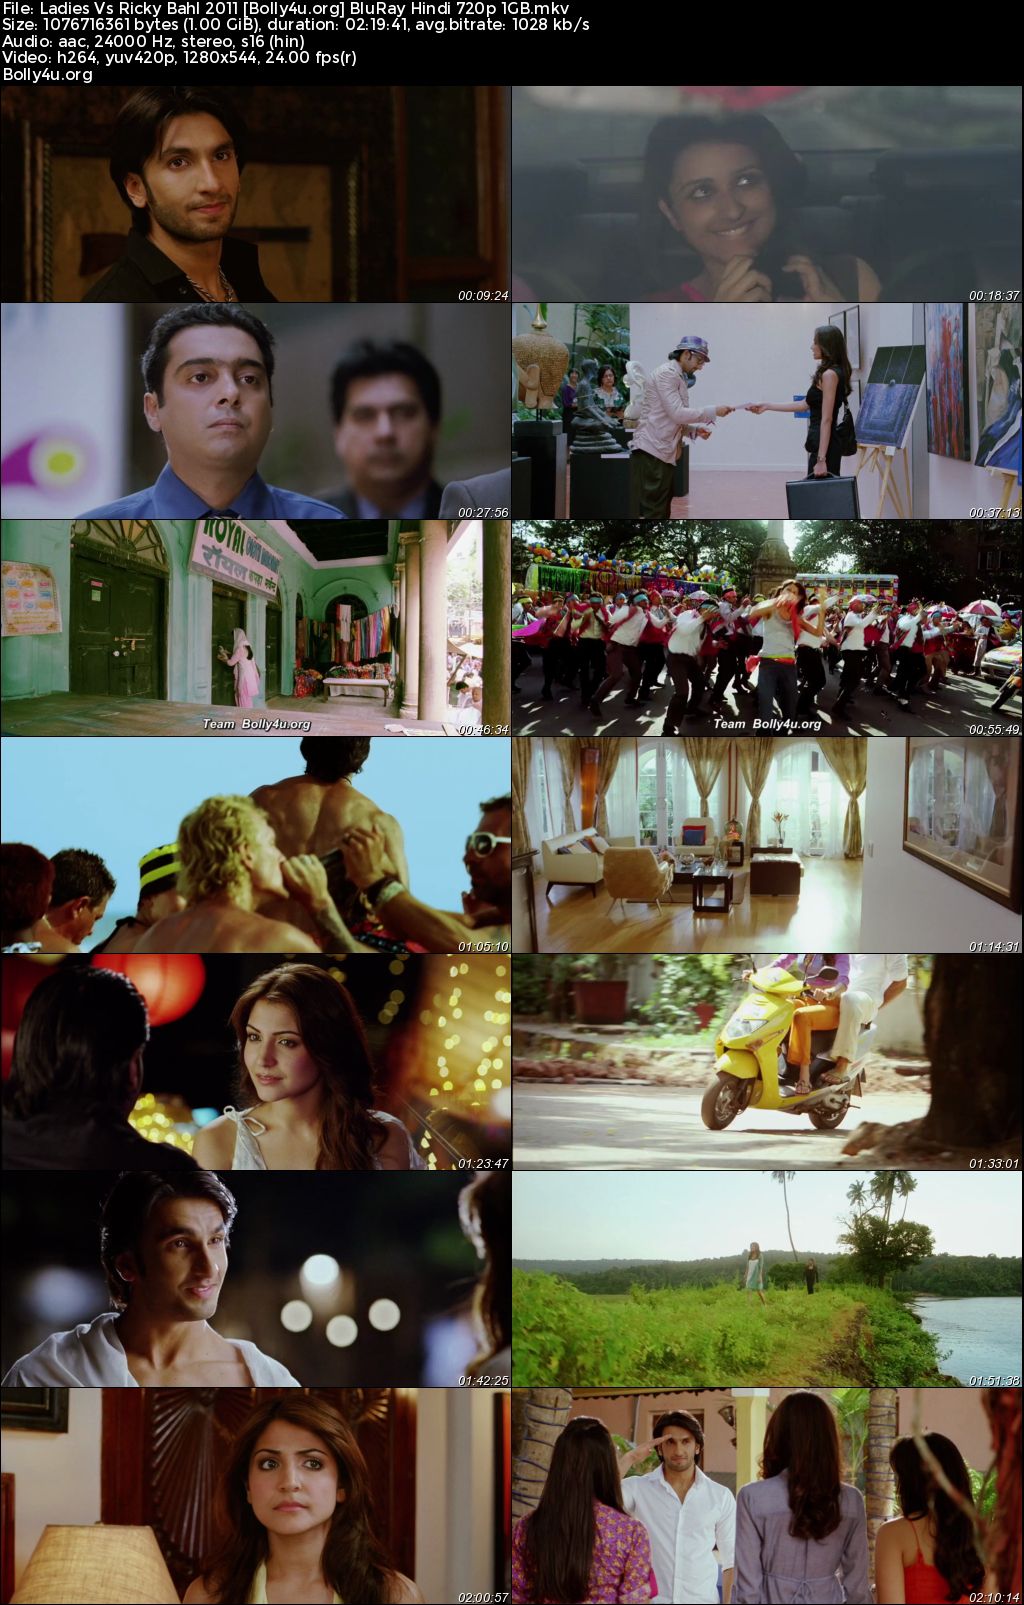 Ladies Vs Ricky Bahl 2011 BluRay Hindi Full Movie Download 1080p 720p 480p